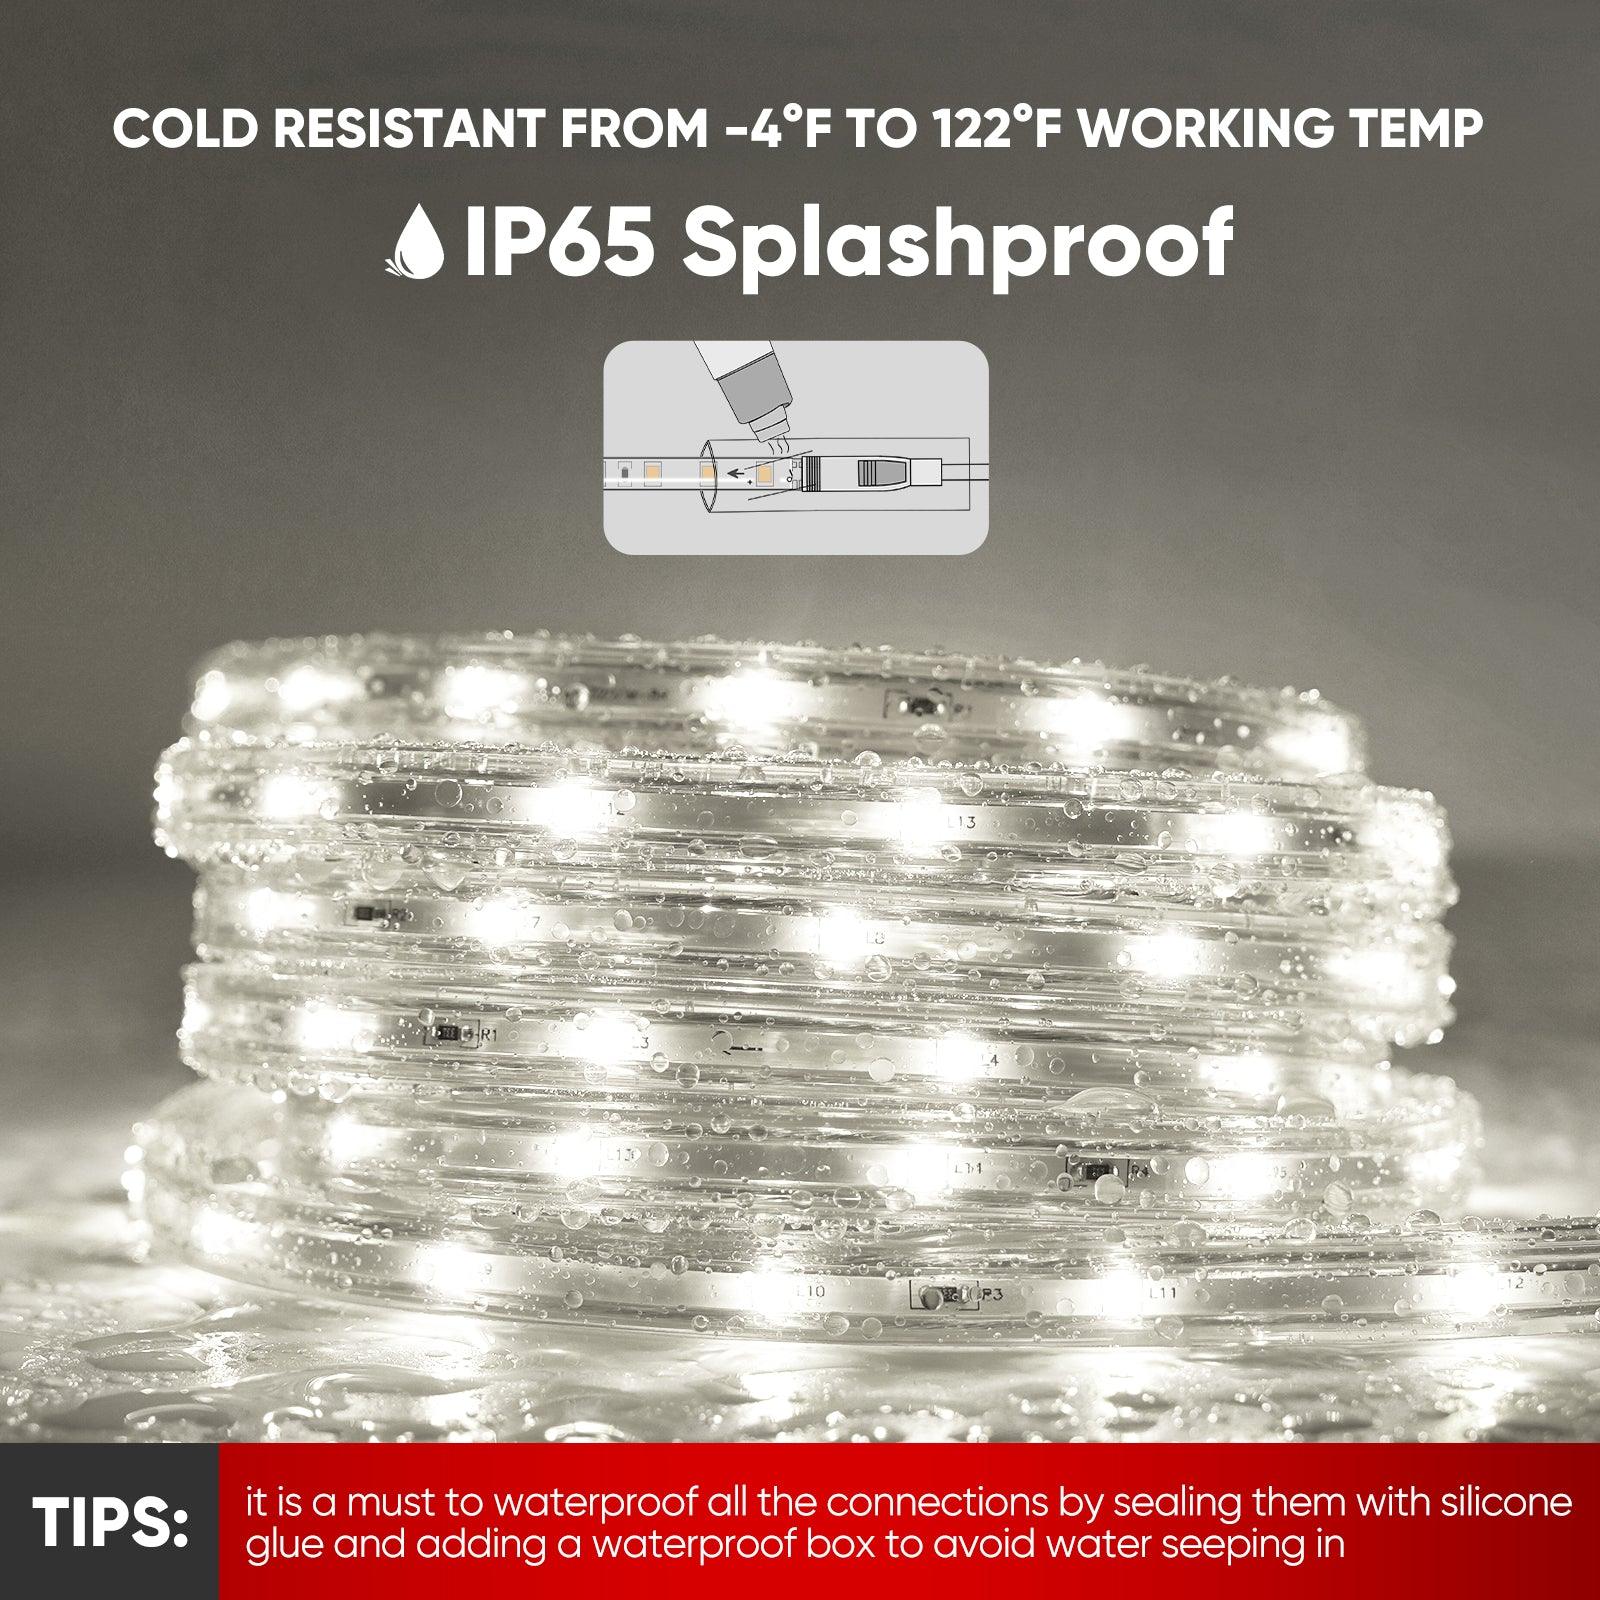 110V Lower Brightness LED Strip Light-Lite Strip Ambient Lighting 180Lumens - Shine Decor